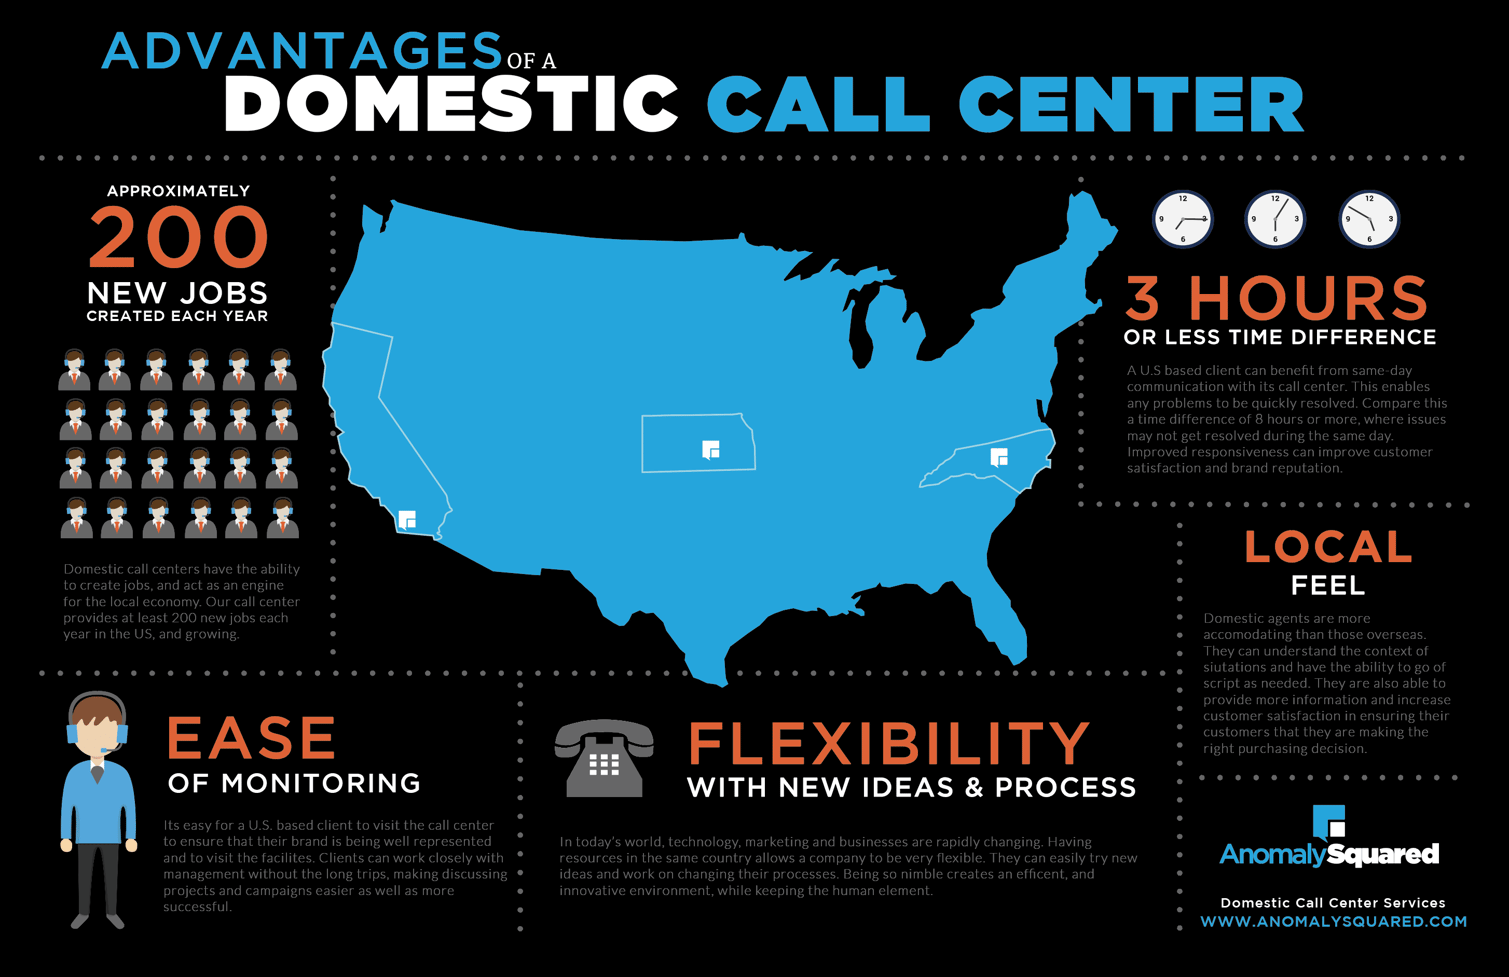 Advantages of a Domestic Call Center